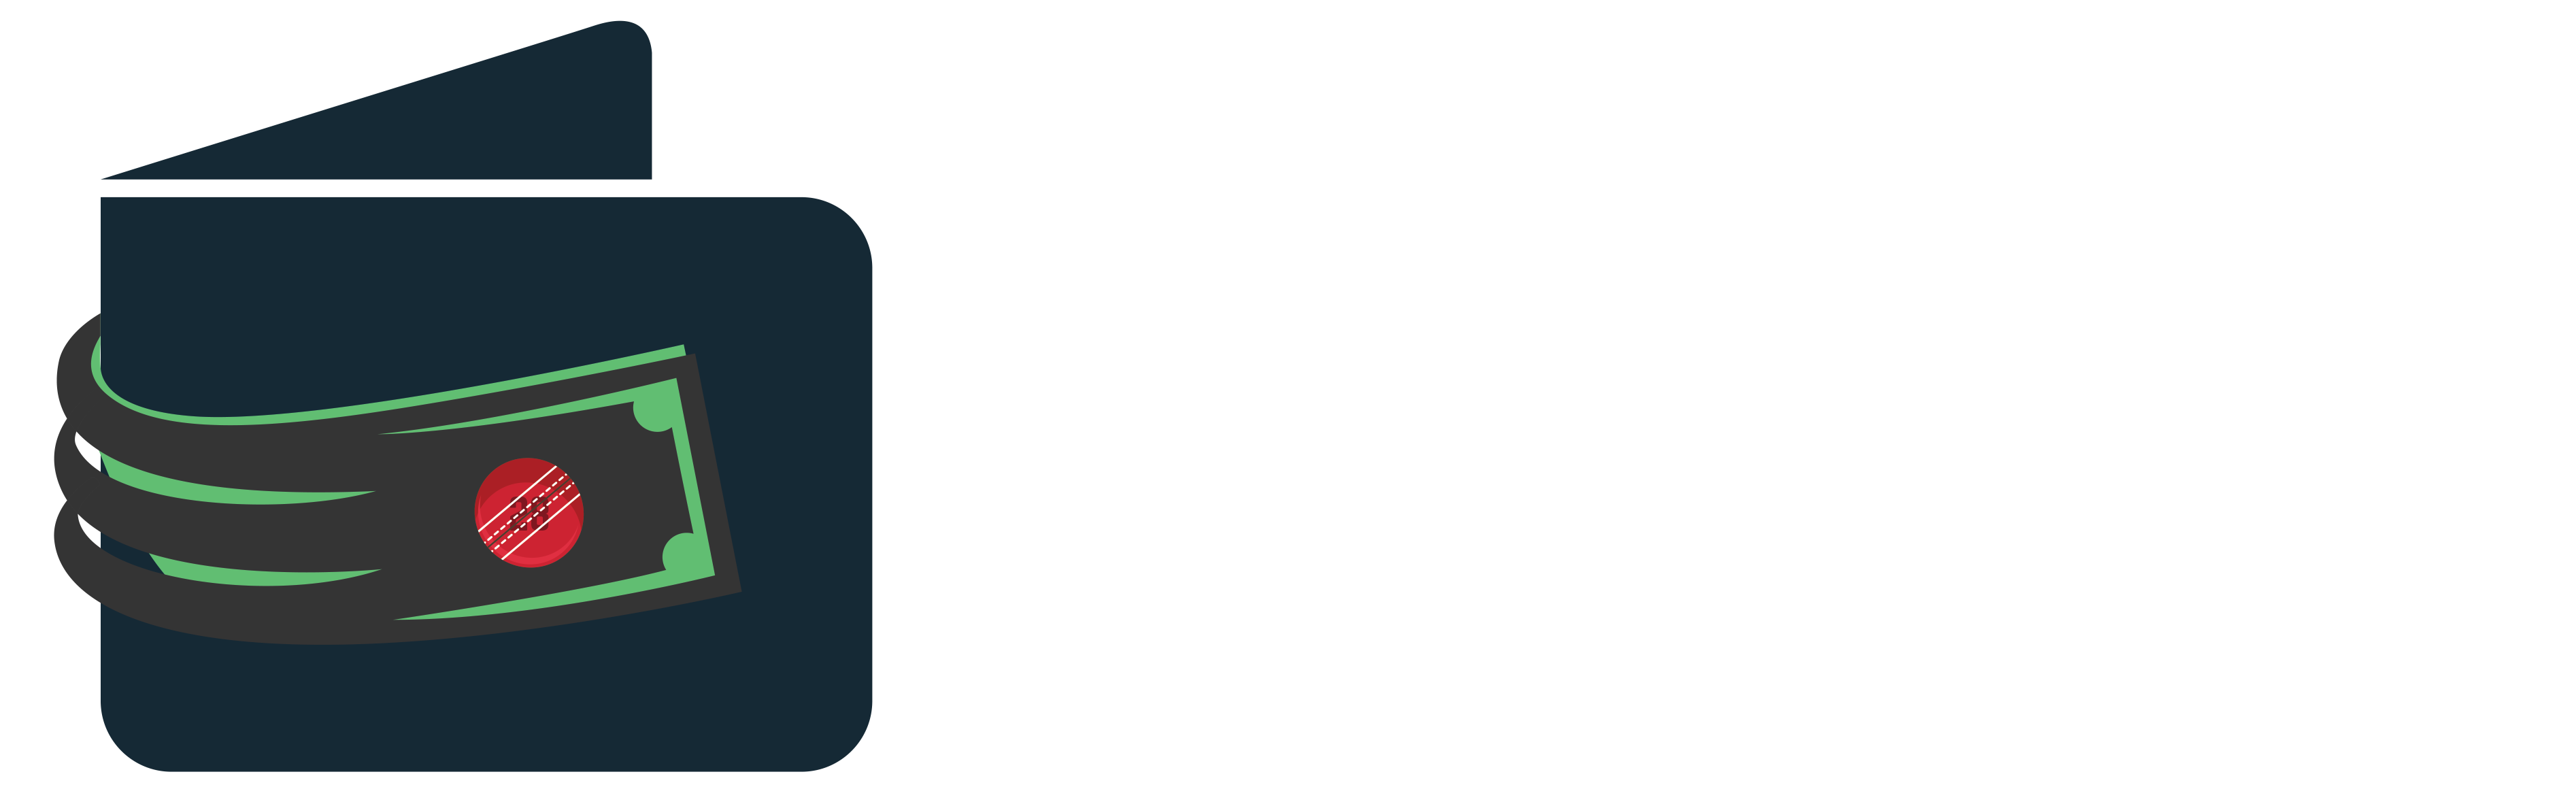 PalsPay